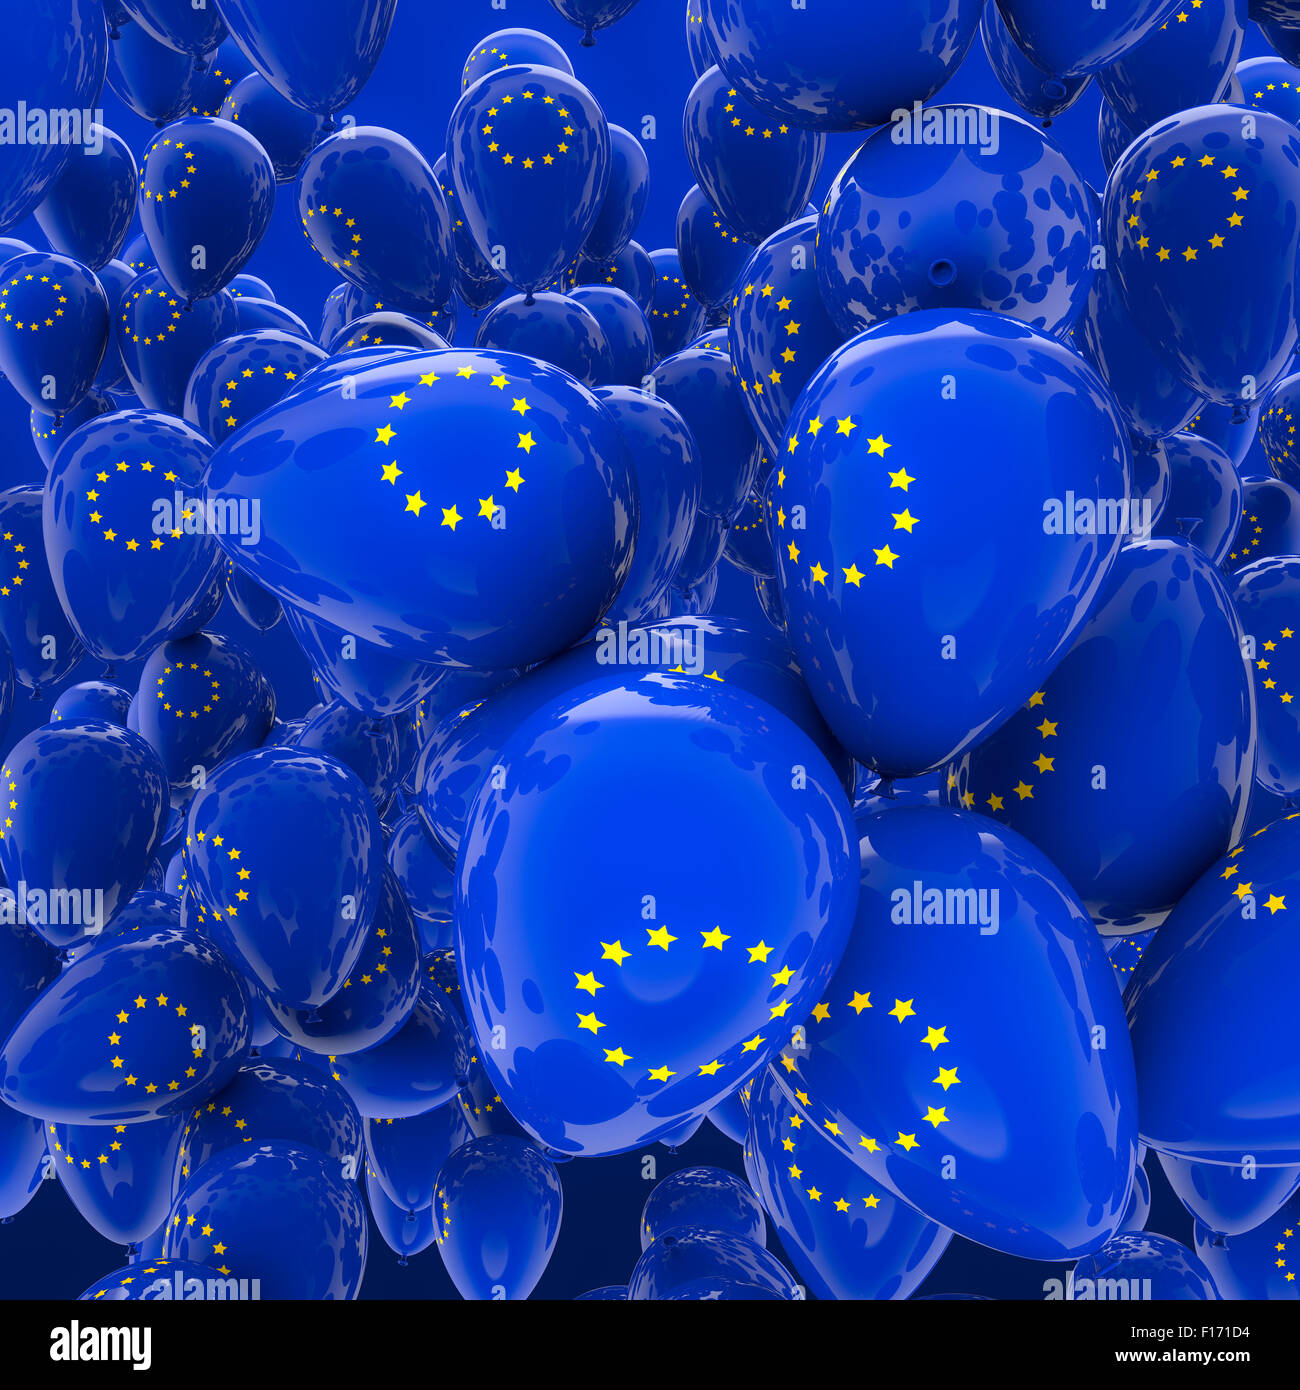 EU balloons / 3D render of balloons with EU stars symbol Stock Photo